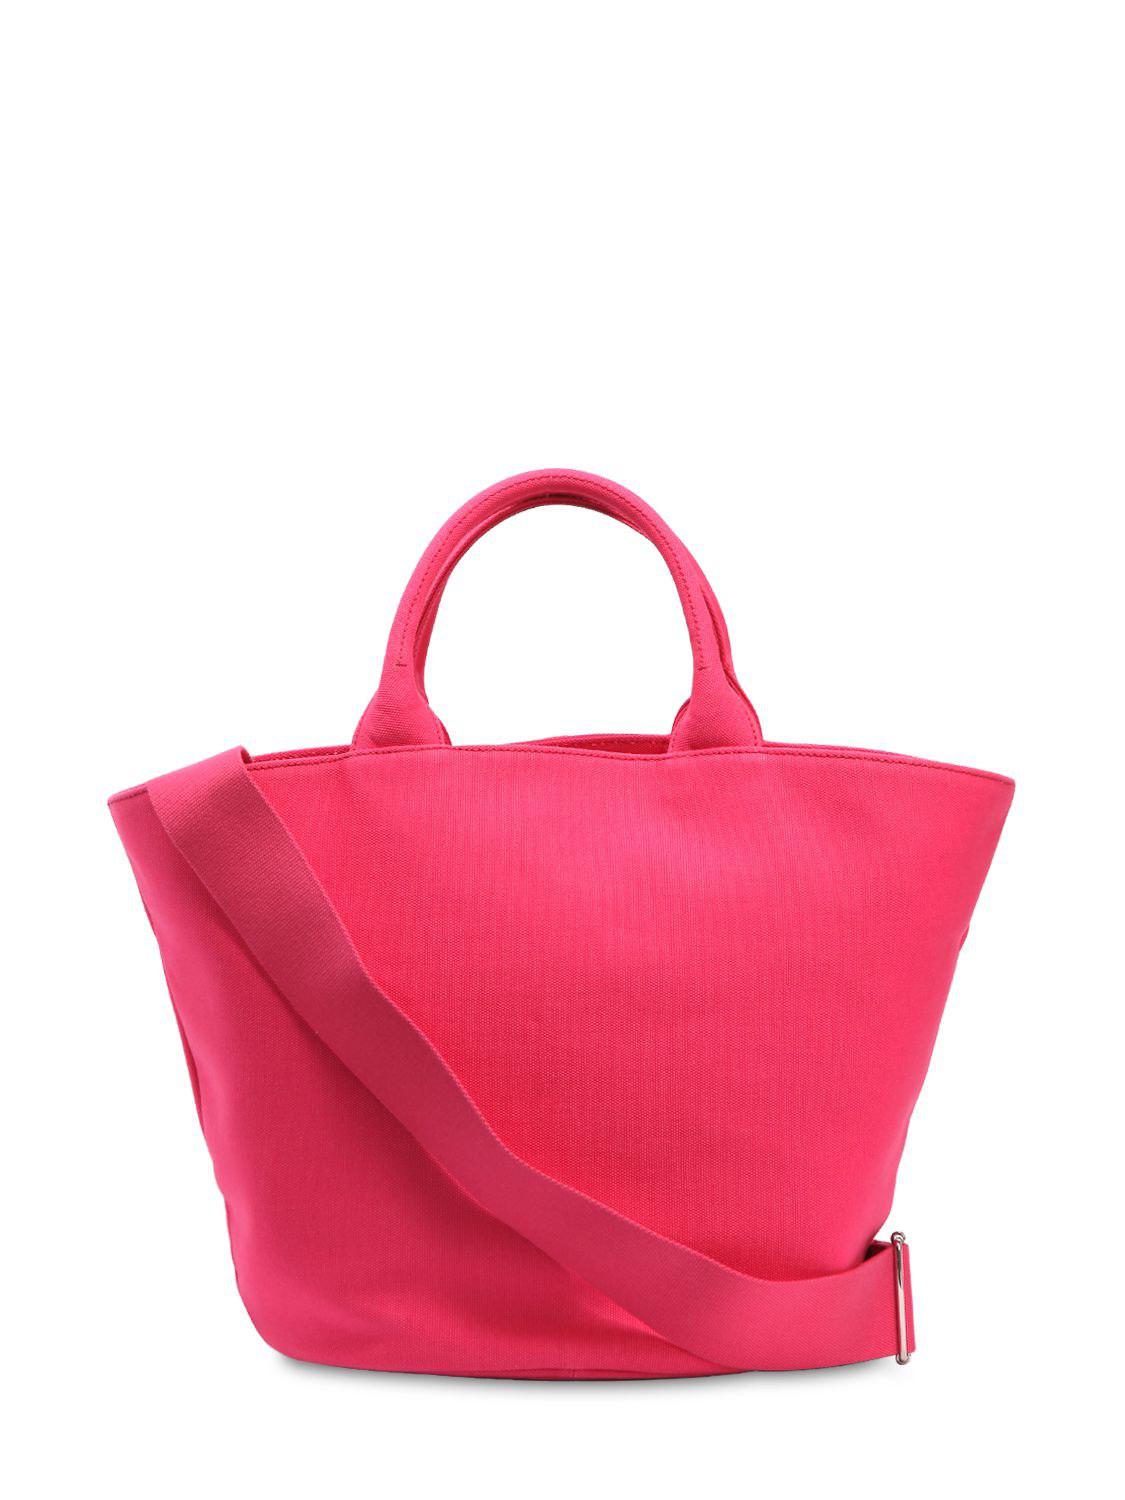 Prada Logo Printed Cotton Canvas Tote Bag in Fuchsia (Pink) - Lyst